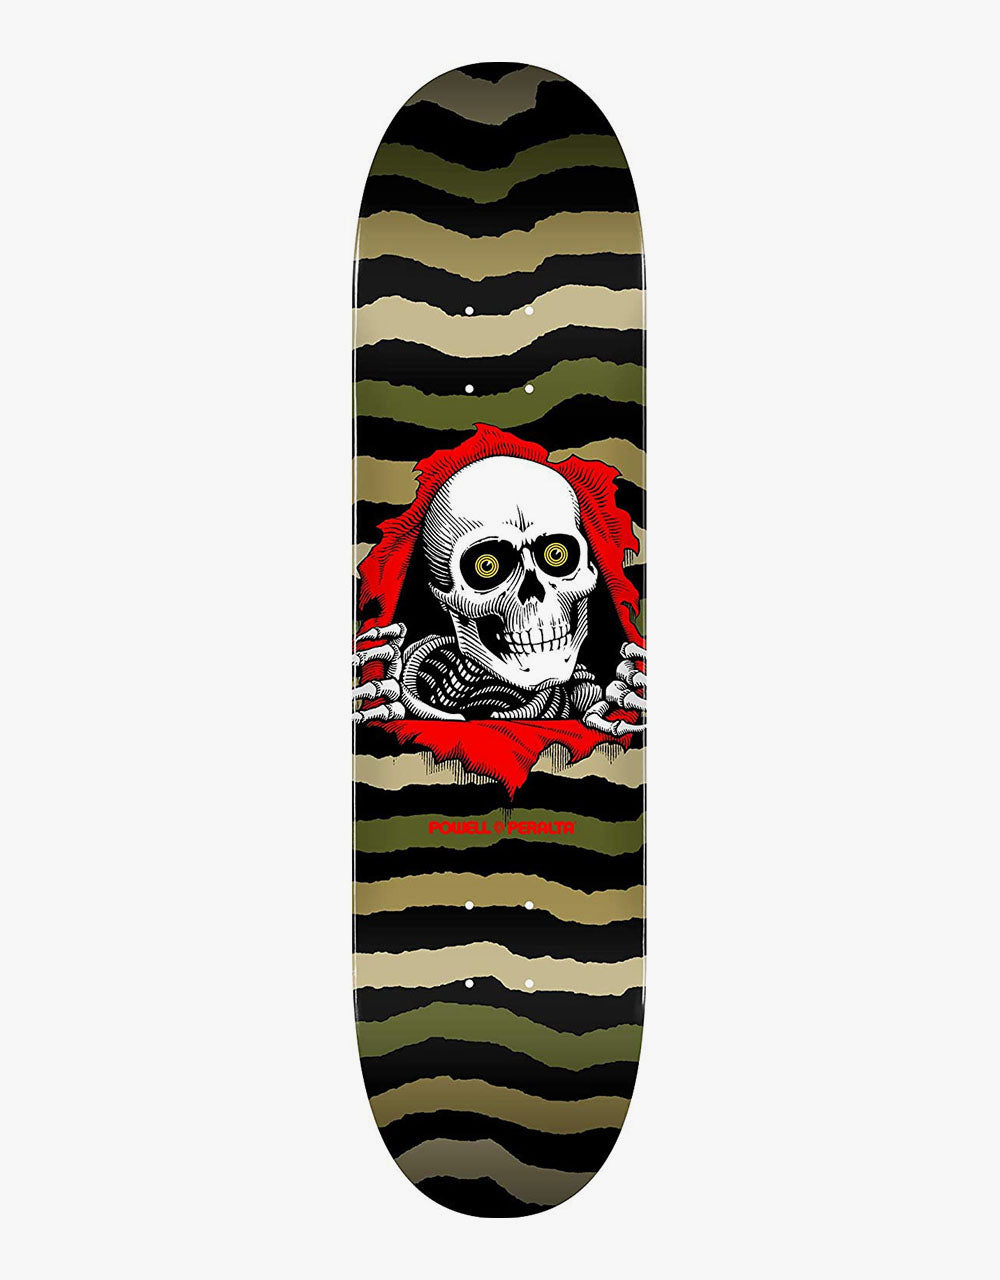 Powell Peralta Ripper 242 Skateboard Deck - 8"